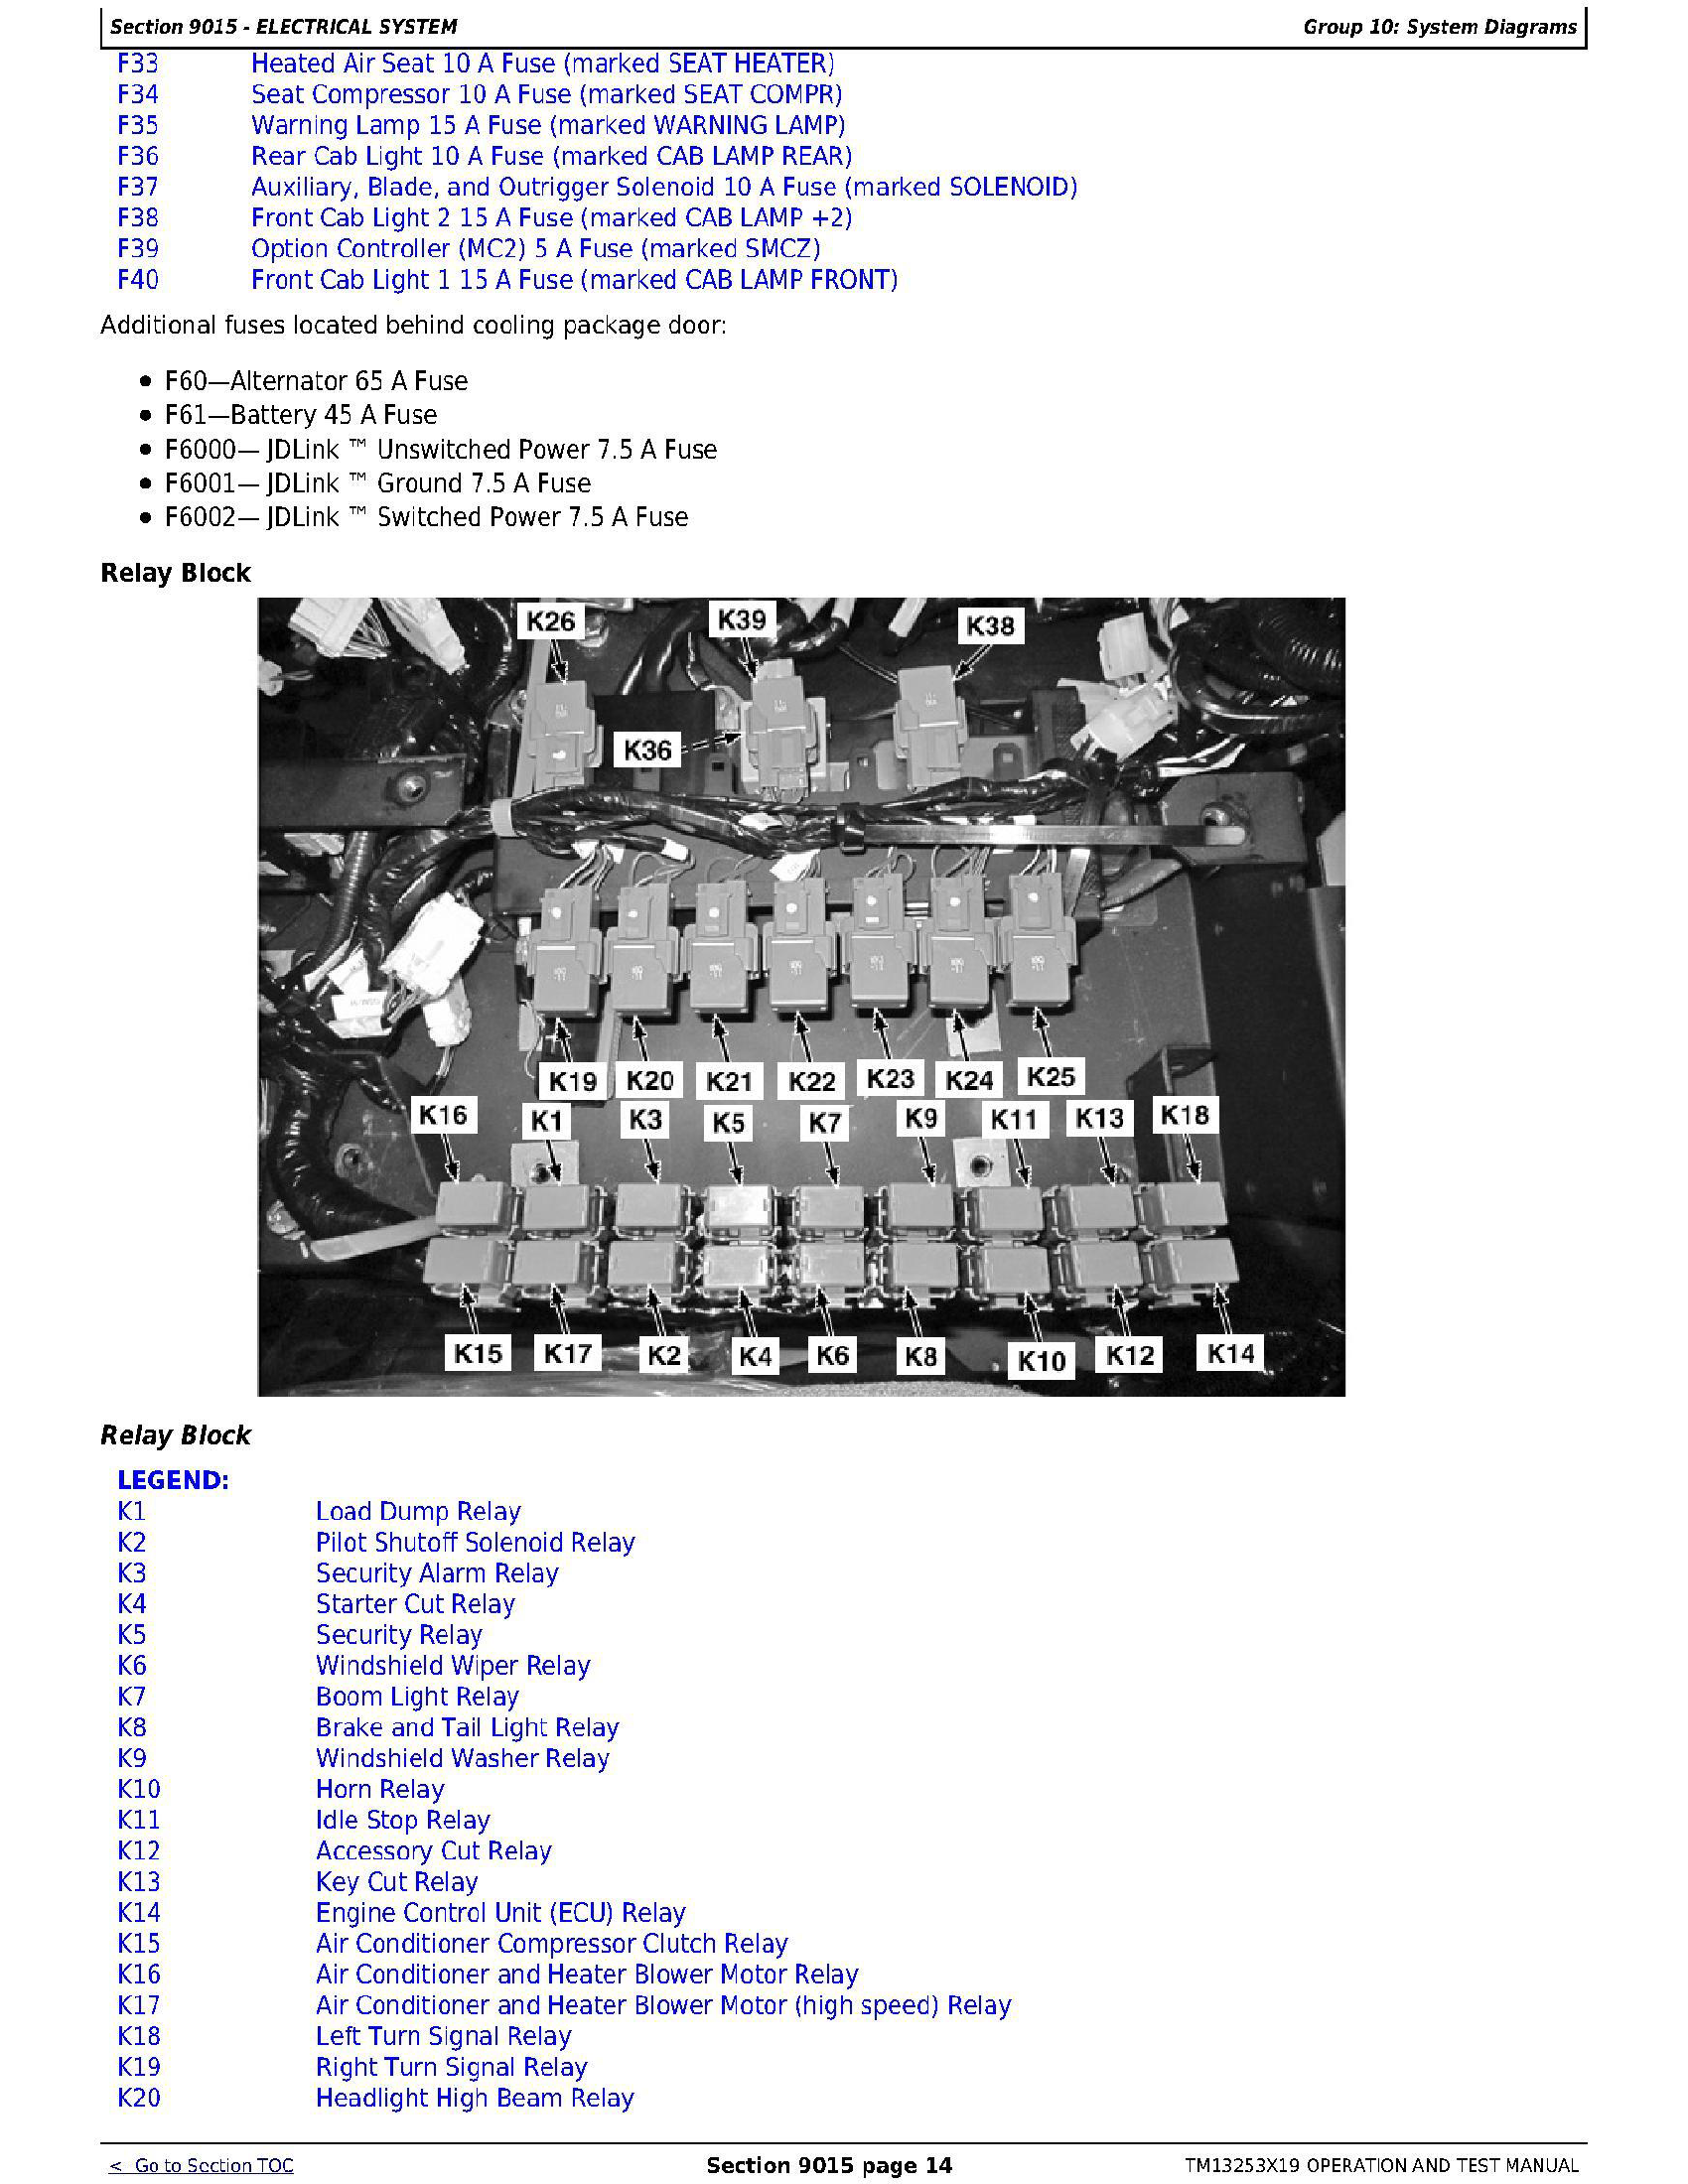 John Deere HCMLBD600004001- manual pdf